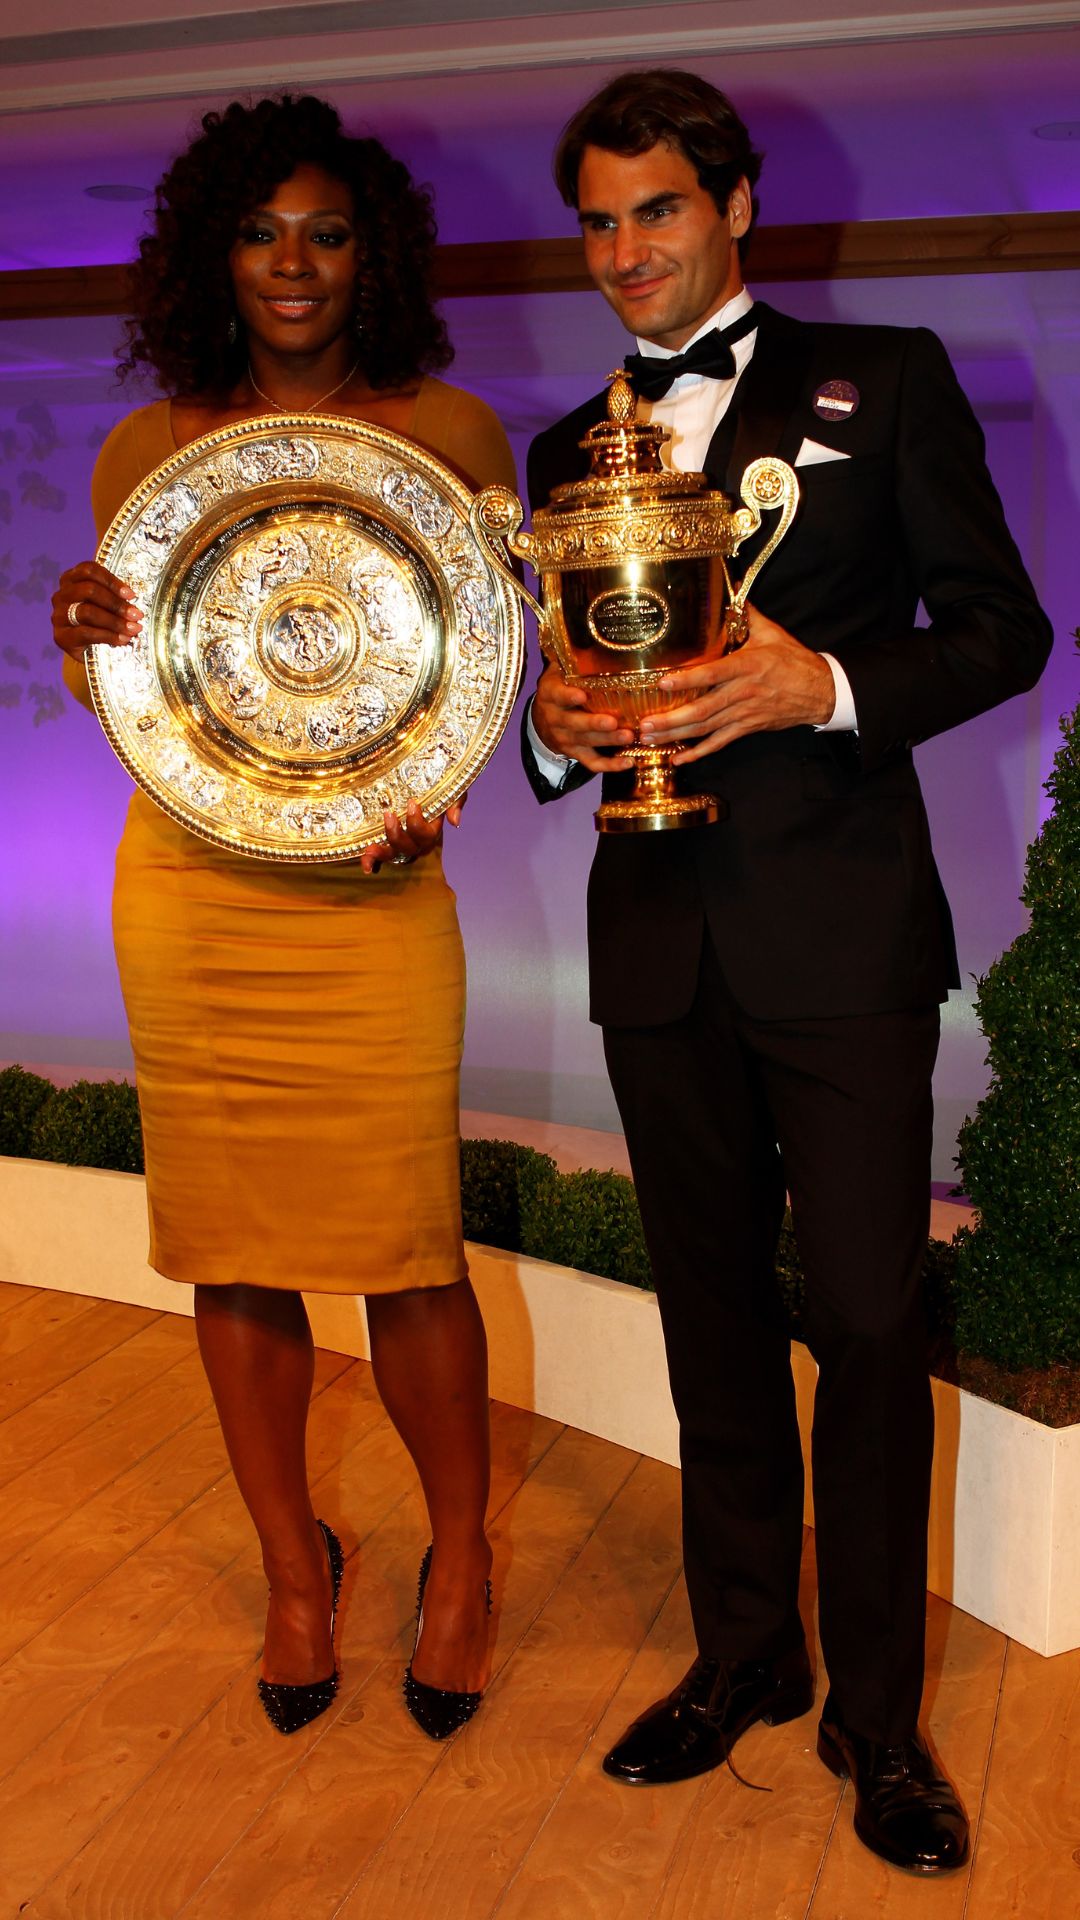 Top 10 Wimbledon winners: Men's and women's singles champions list (Open Era)